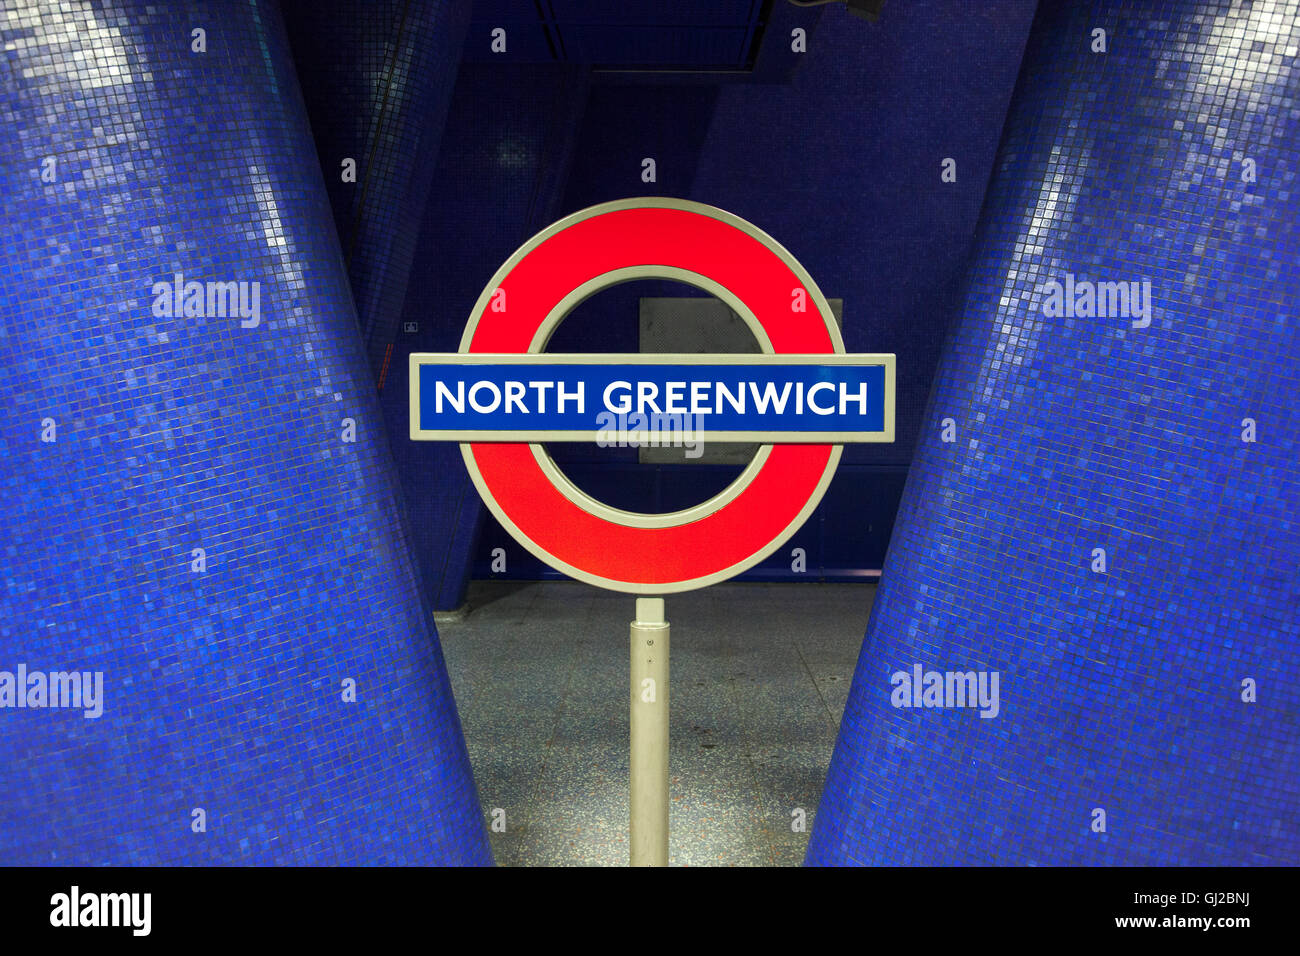 North Greenwich u Schild am North Greenwich u-Bahnstation Plattform, London, UK Stockfoto